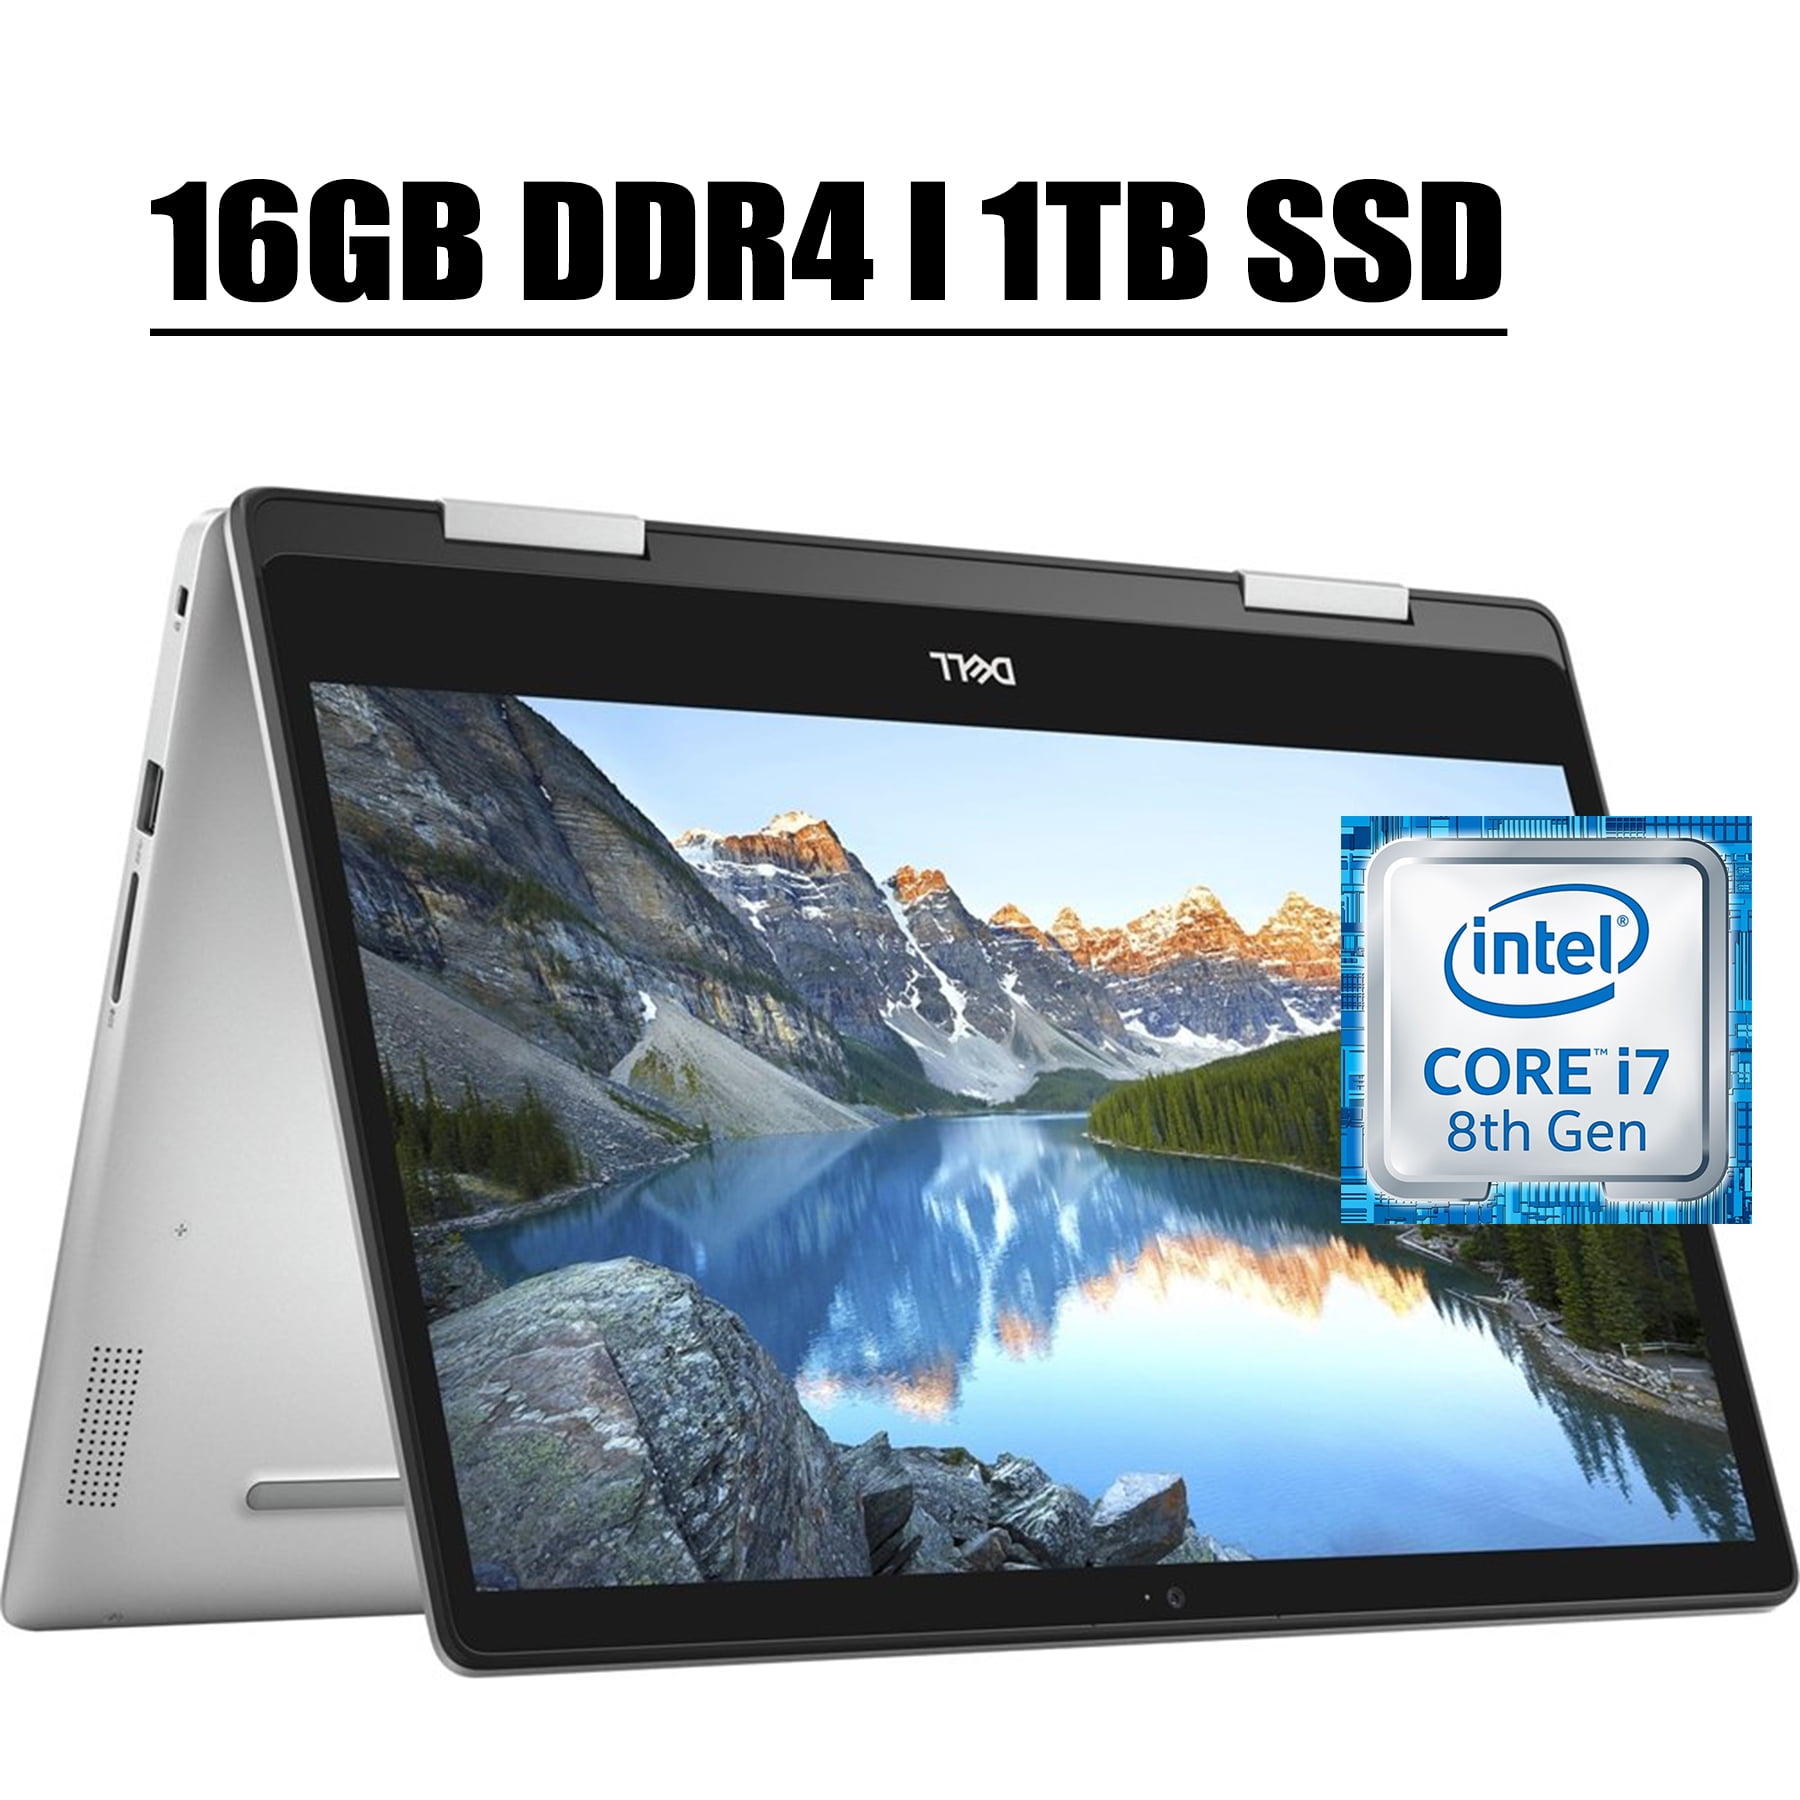 2020 Premium Dell Inspiron 14 5000 5482 2 in 1 Laptop Computer I 14'' Full  HD IPS Touchscreen I Intel Quad-Core i7-8565U I 16GB DDR4 1TB SSD I 